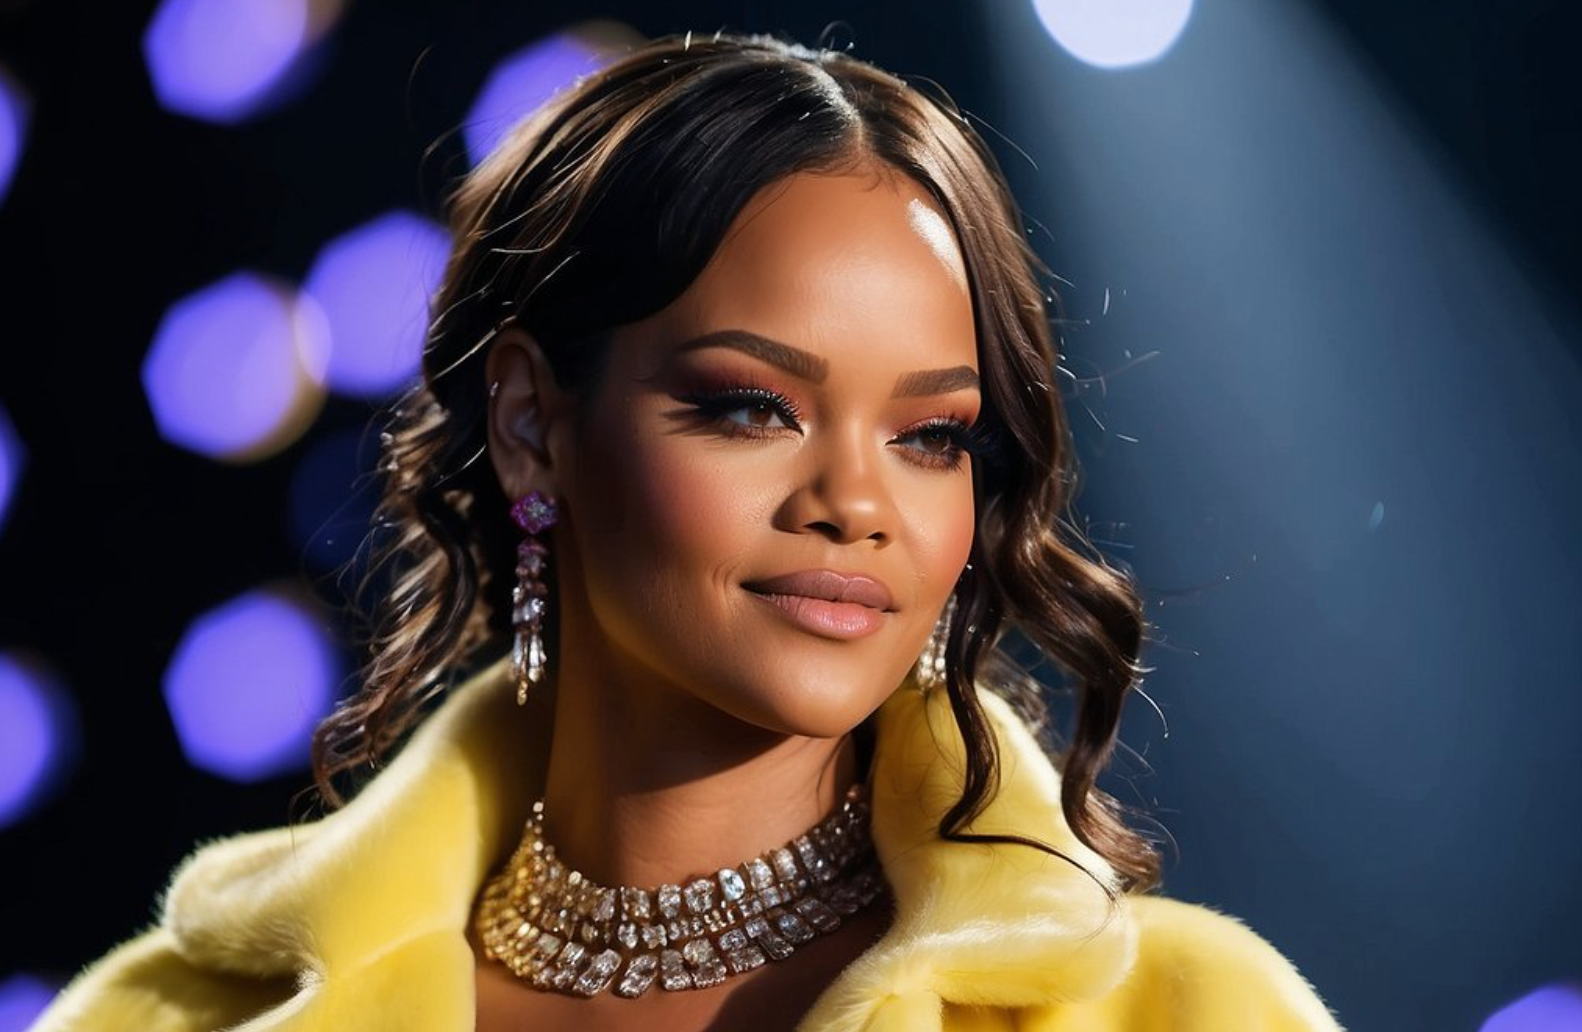 Rihanna hair and beauty routine looks